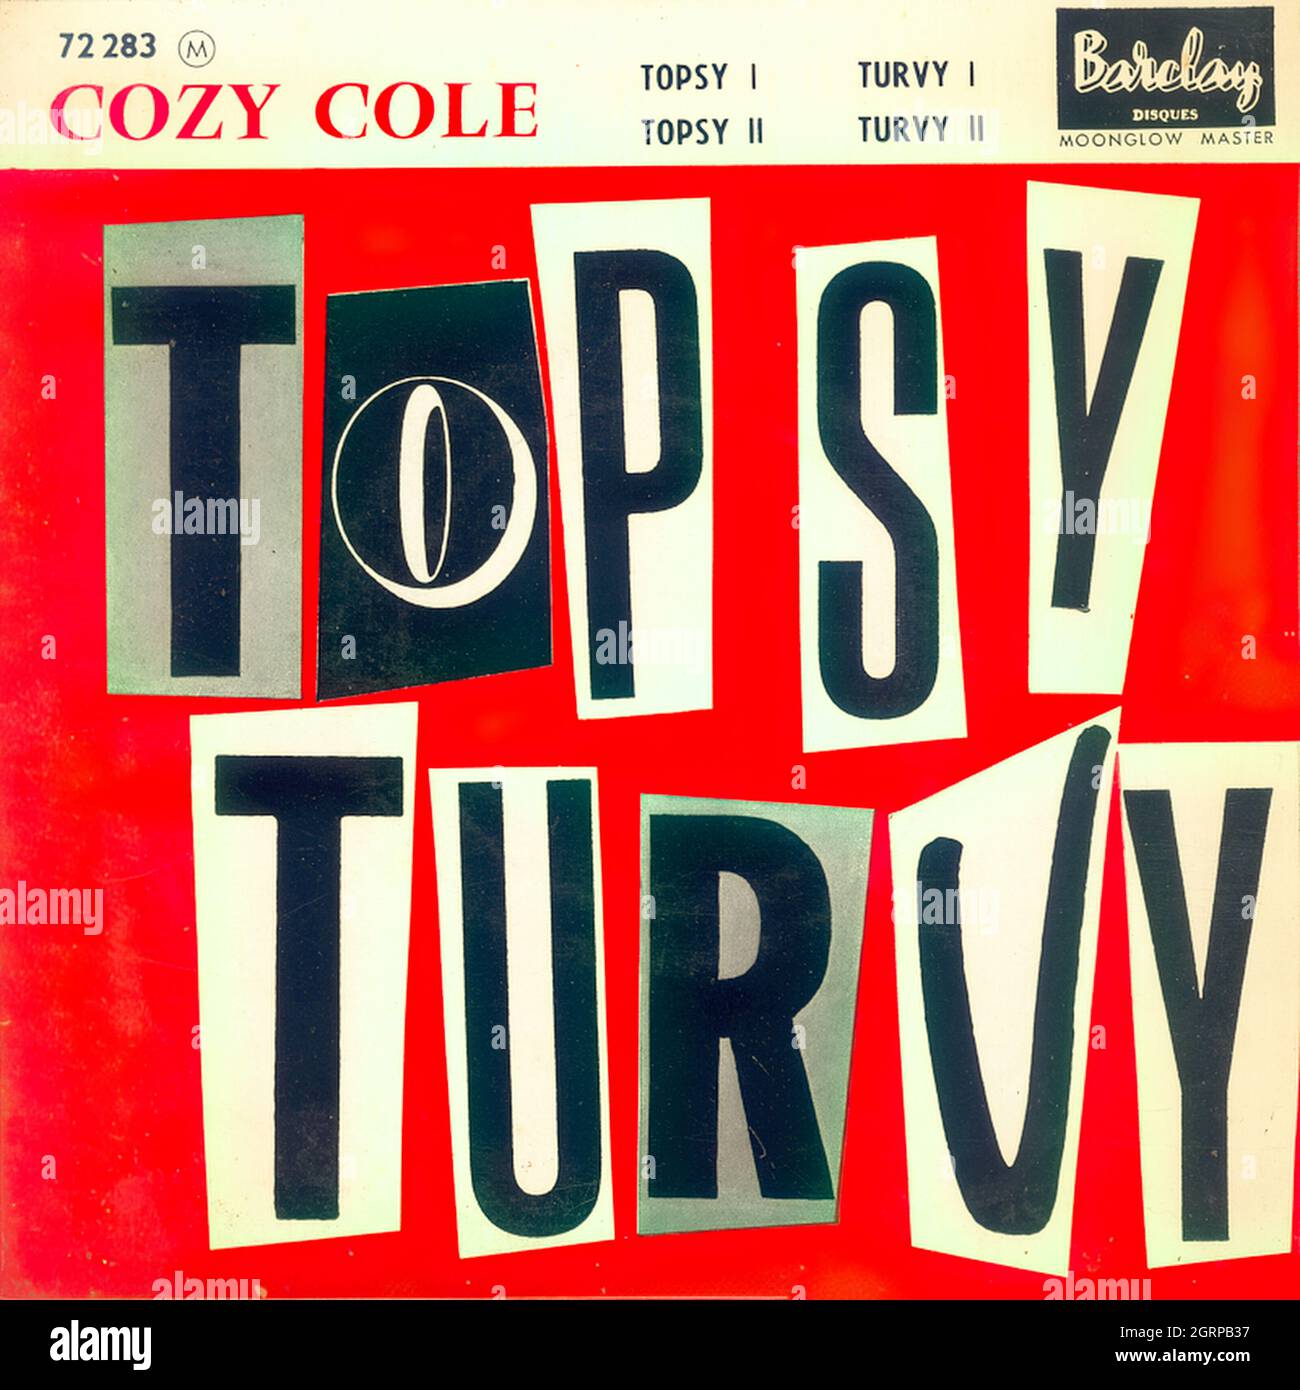 Cozy Cole - Topsy-Turvy EP - Vintage Vinyl Record Cover Banque D'Images